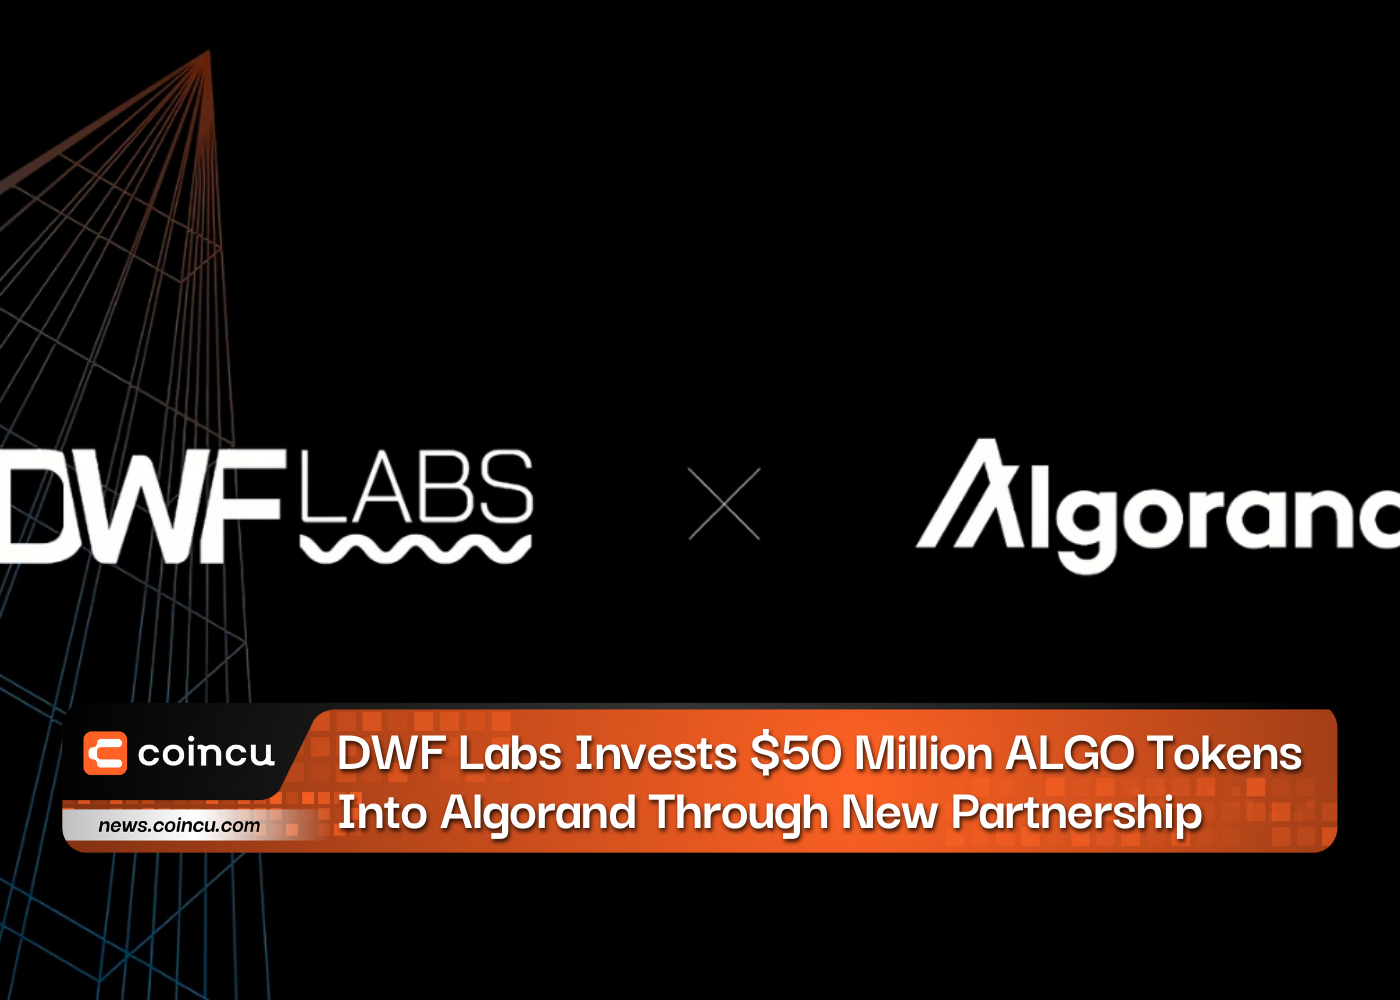 DWF Labs Invests $50 Million ALGO Tokens Into Algorand Through New Partnership